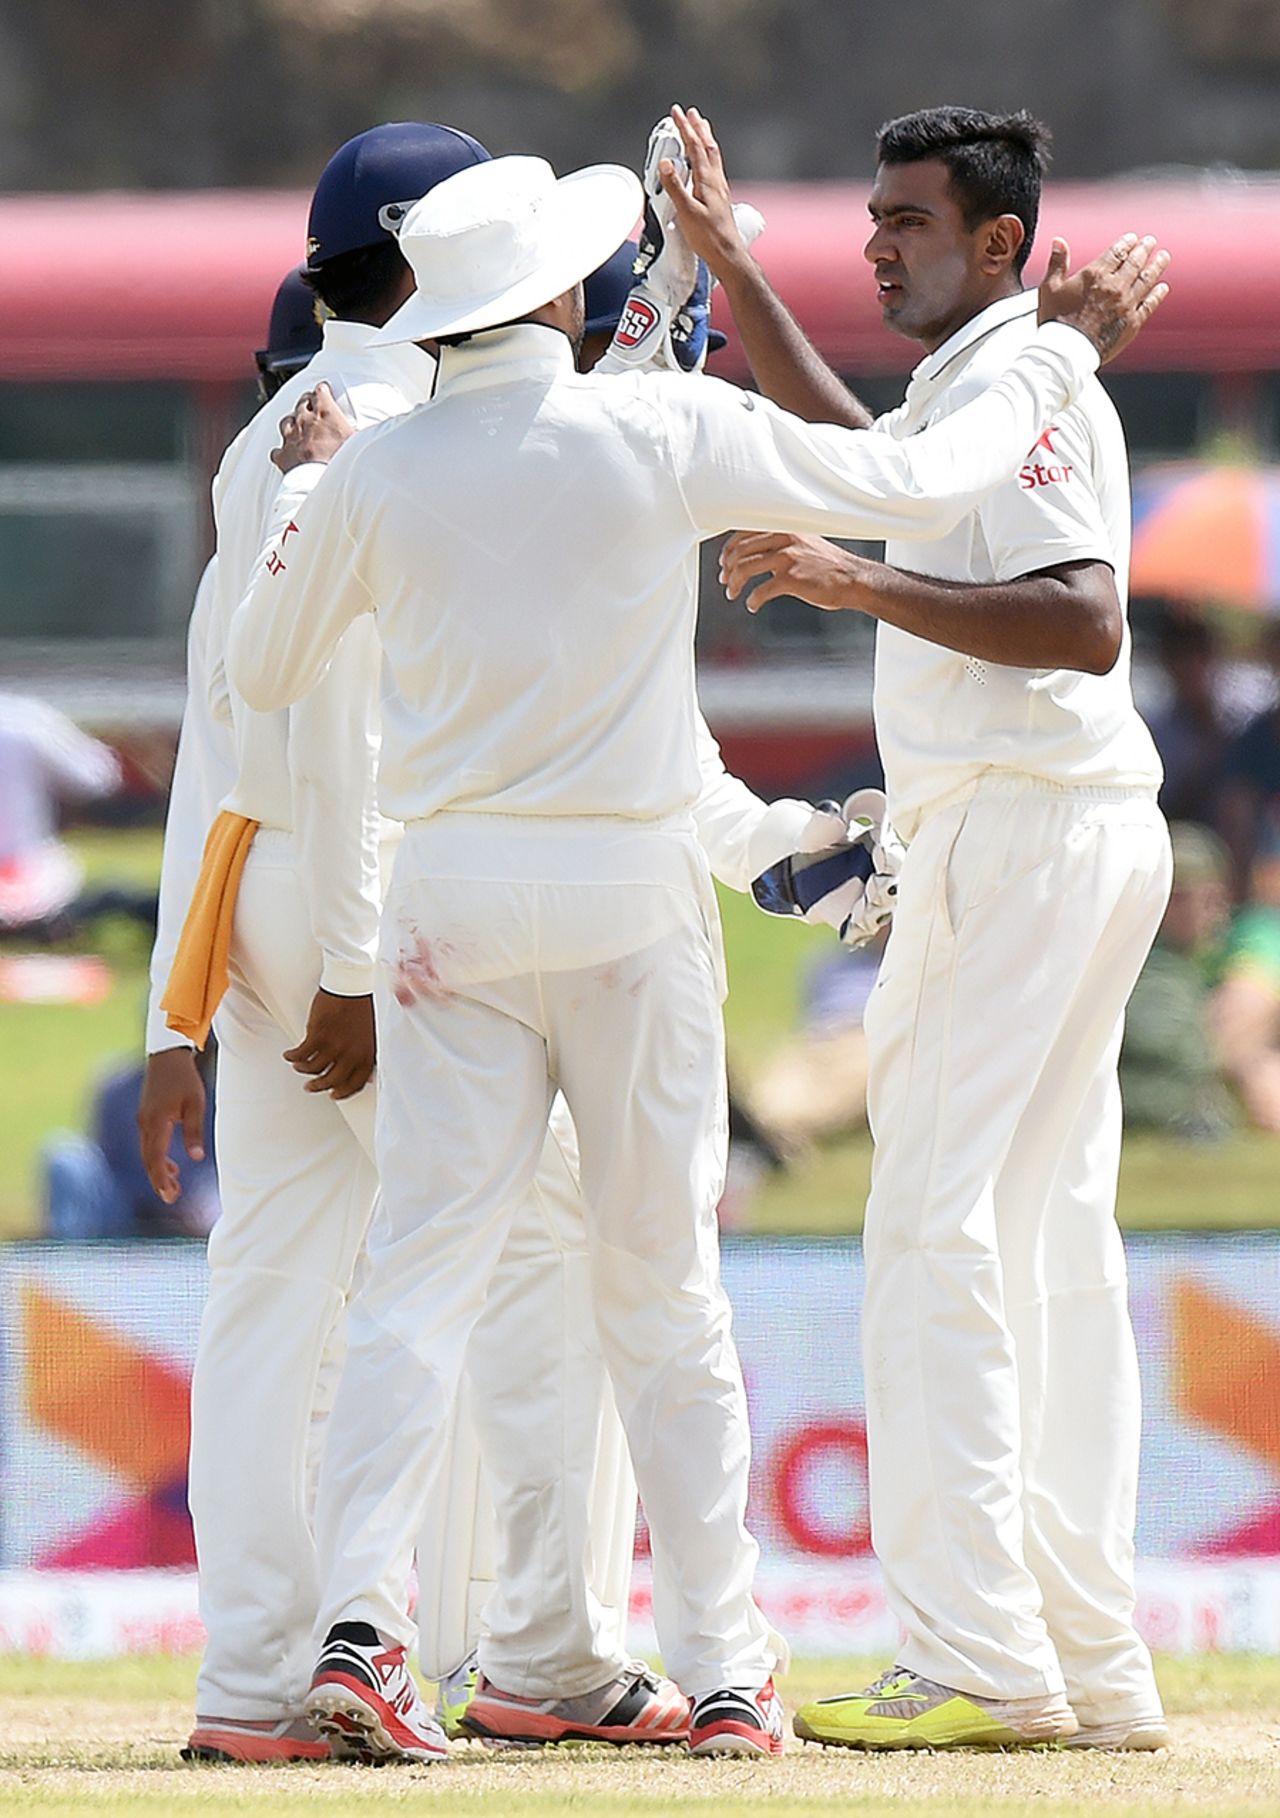 Team-mates congratulate R Ashwin after a Sri Lankan dismissal, Sri Lanka v India, 1st Test, Galle, 1st day, August 12, 2015